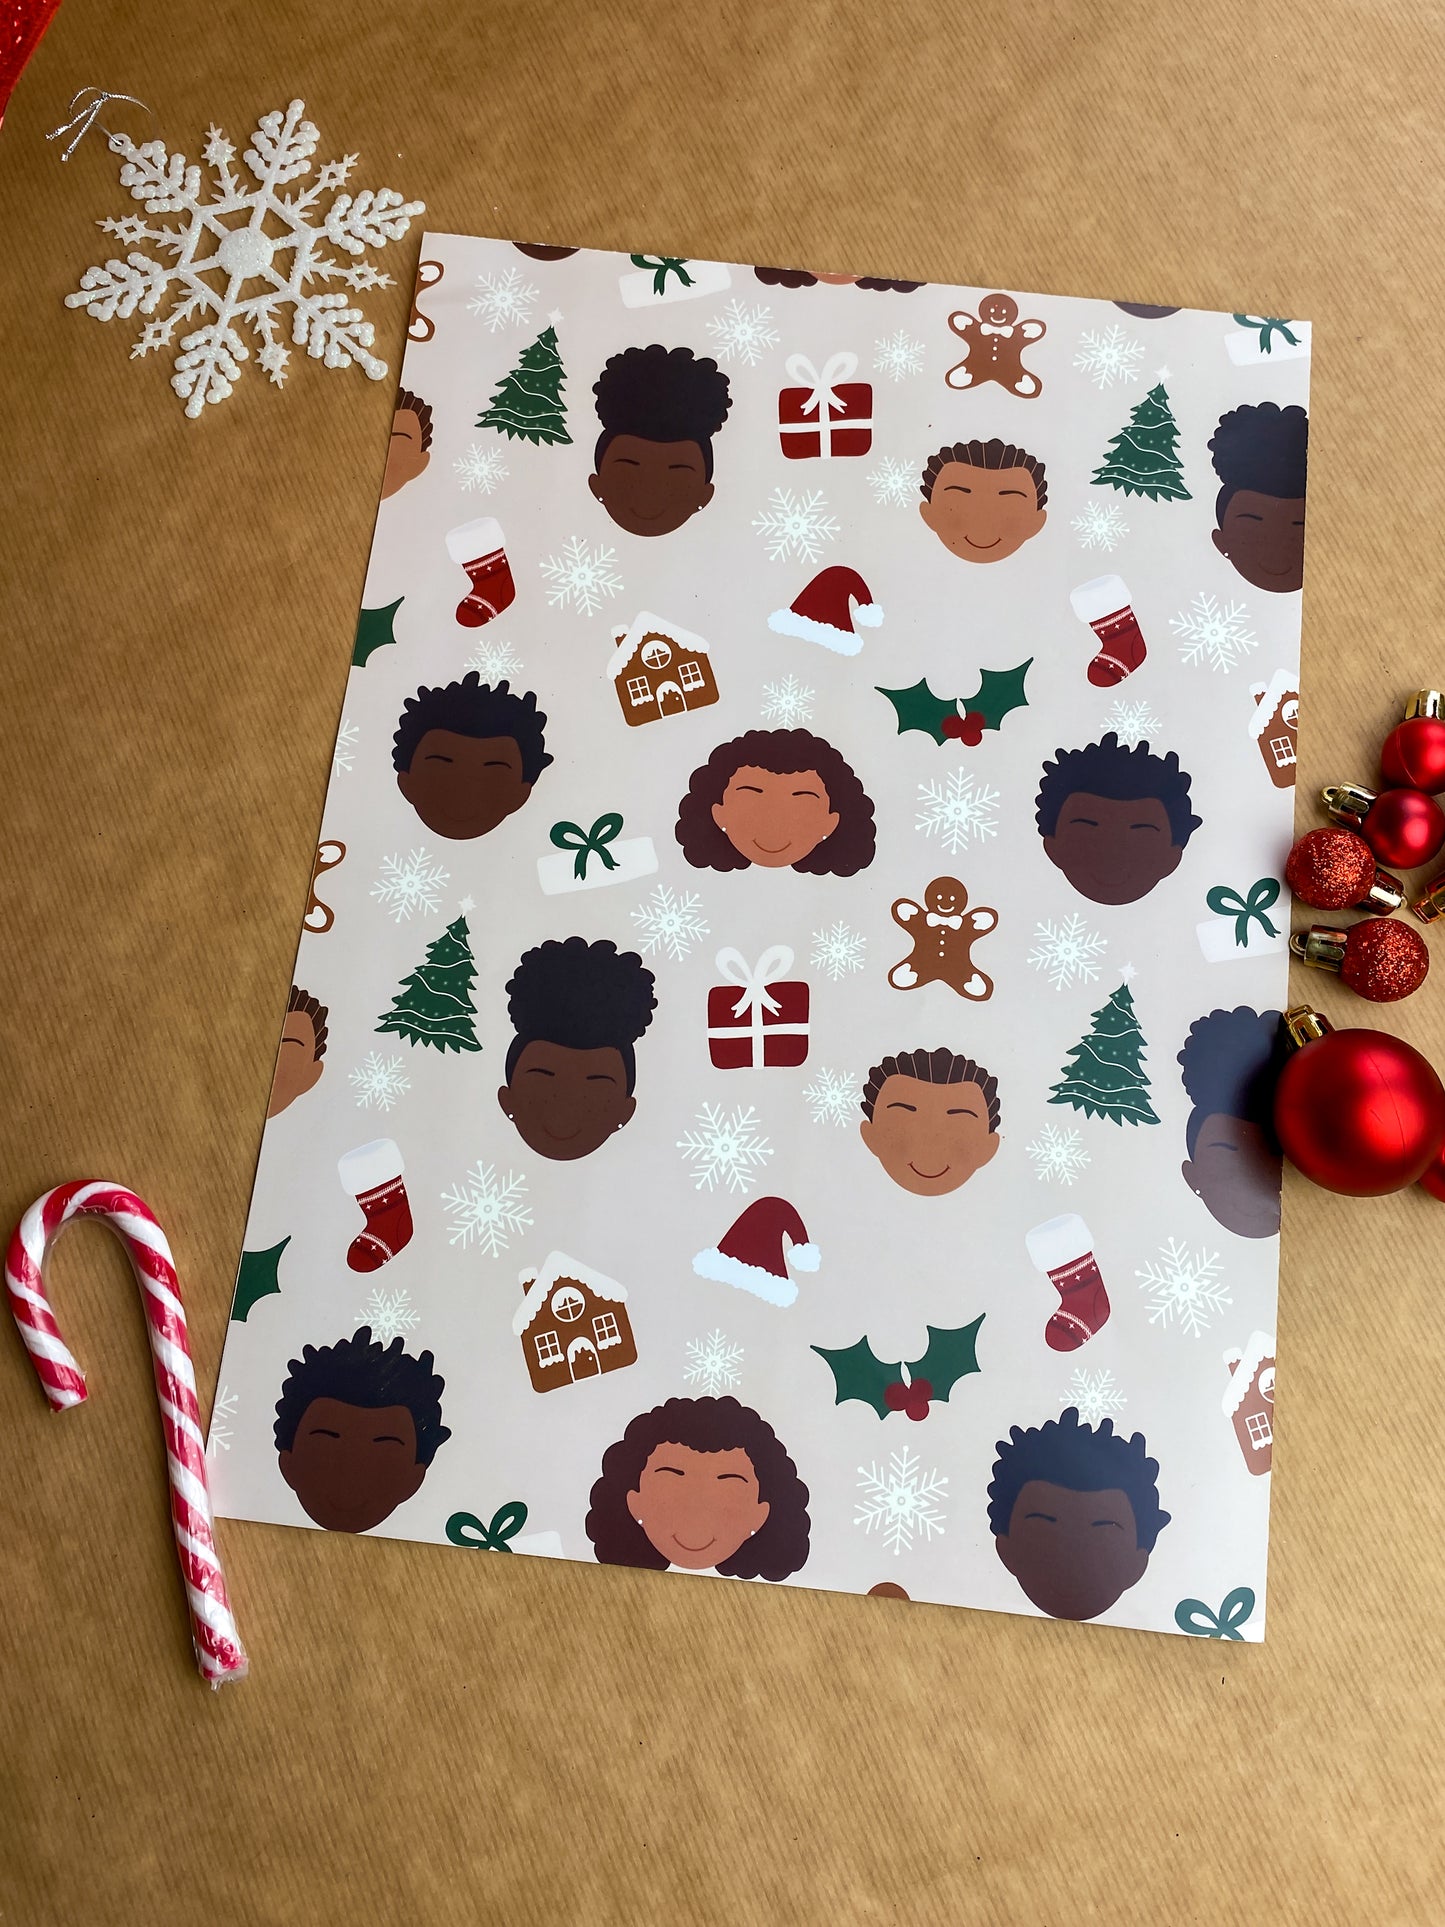 Black Kids Christmas Ethnic Mixed Race Children Wrapping Paper Gift Wrap Boys & Girls Boy little Girl